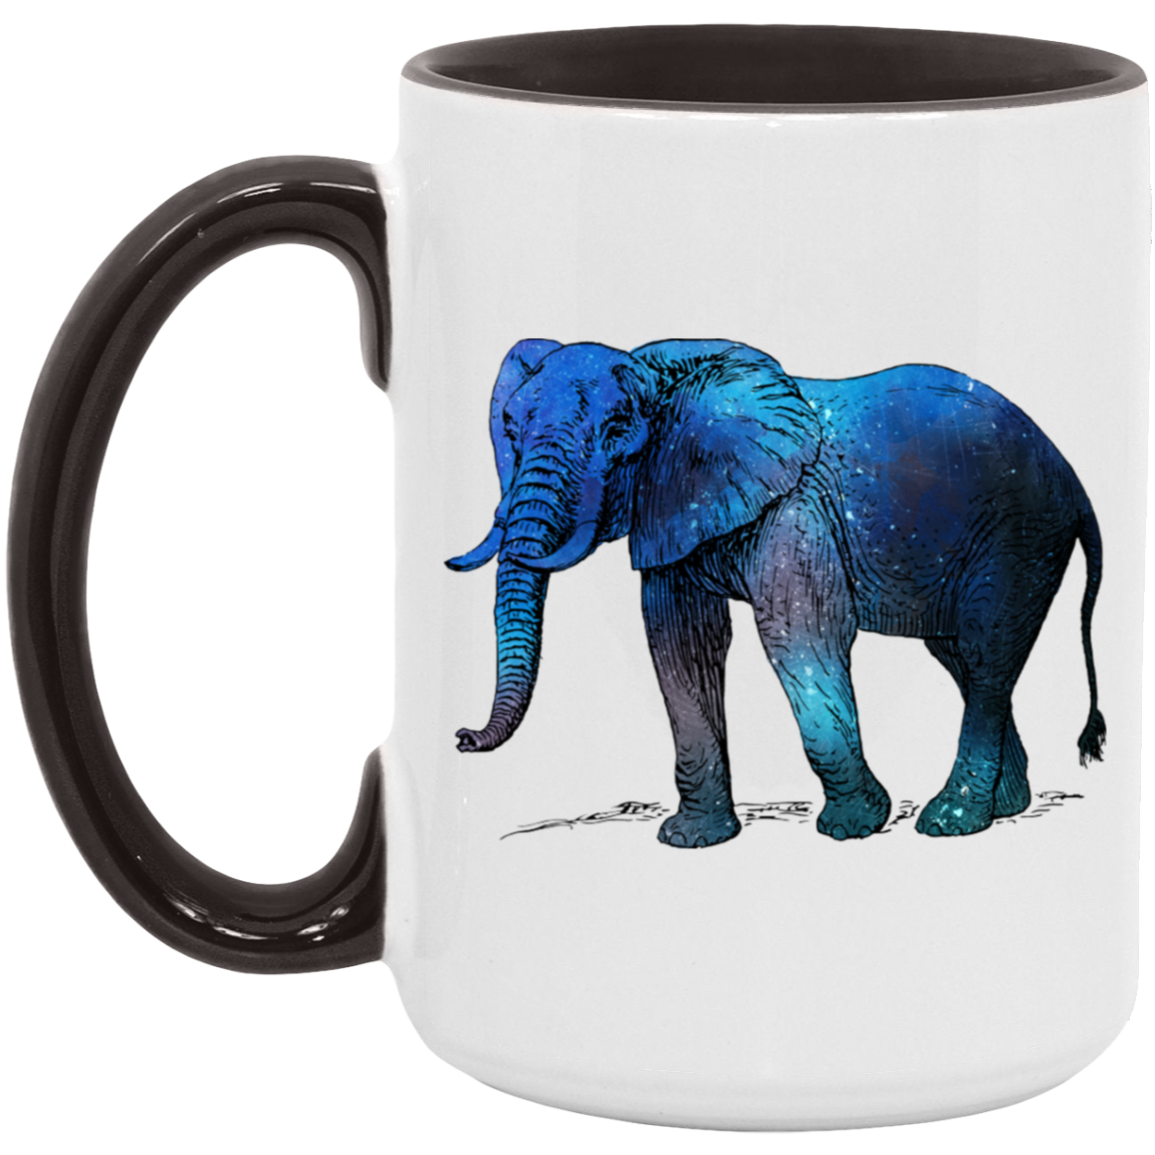 Blue Elephant - Mugs